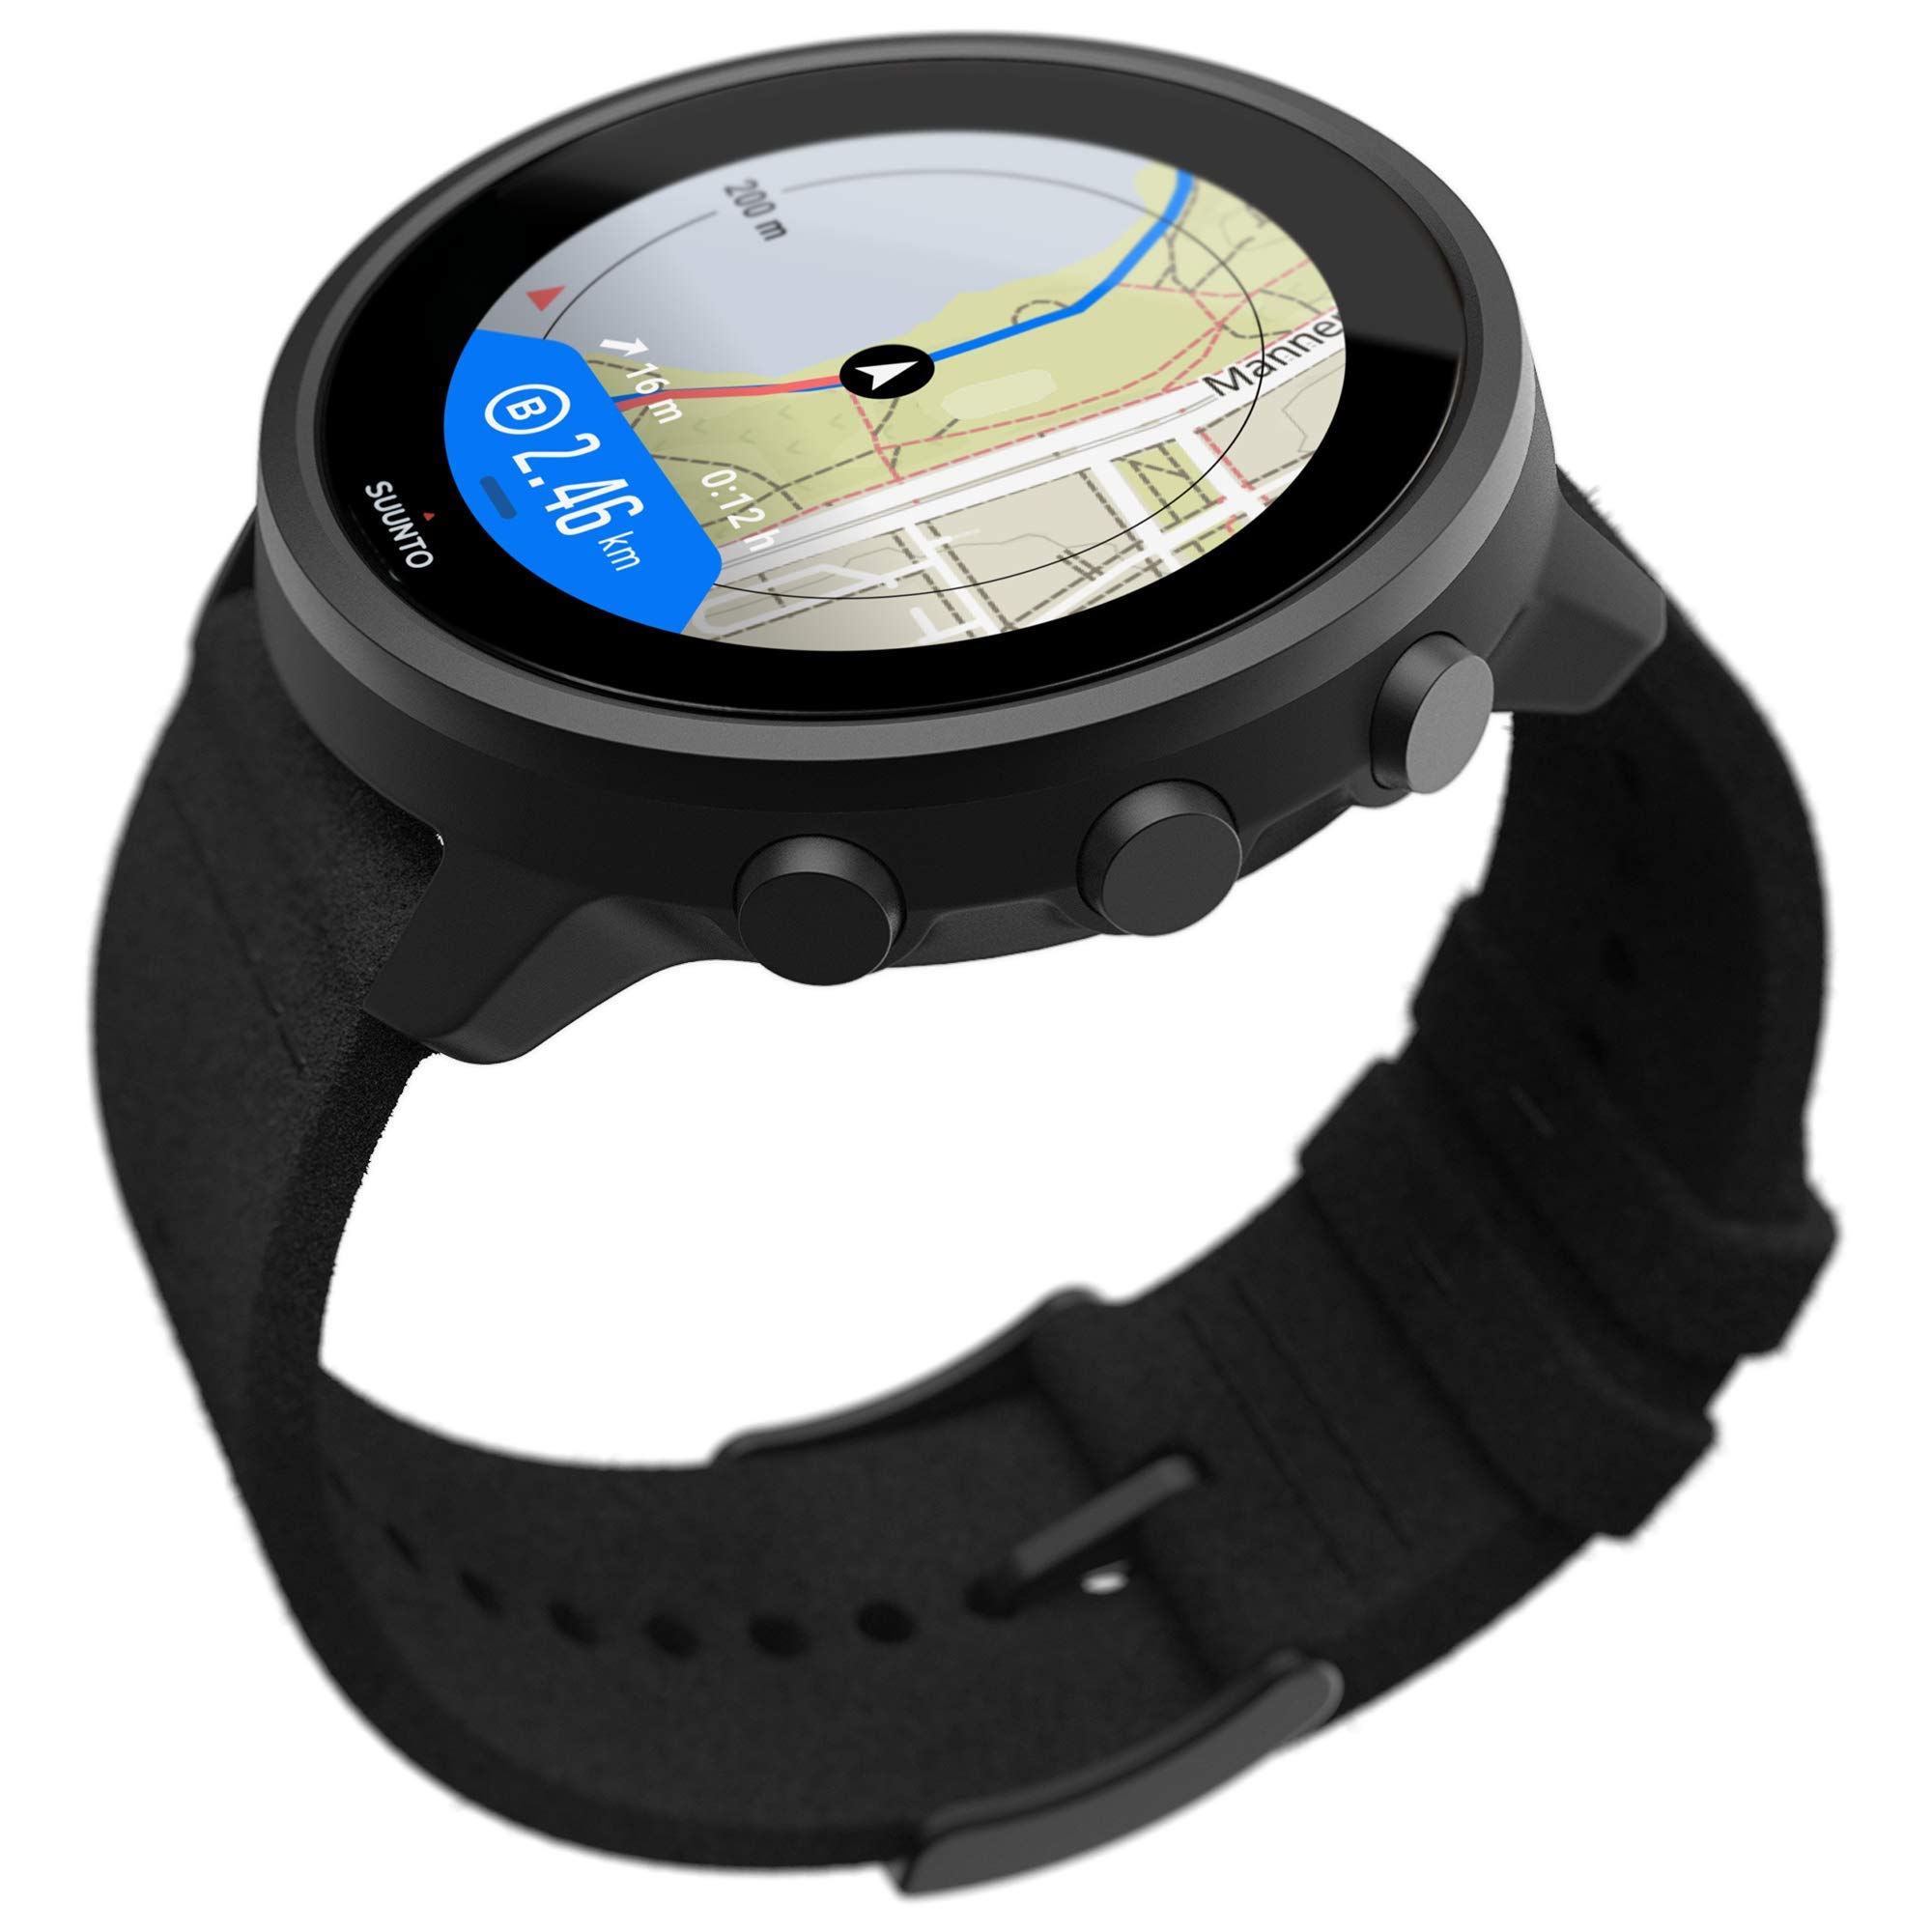 SUUNTO 7 GPS Sports Smart Watch